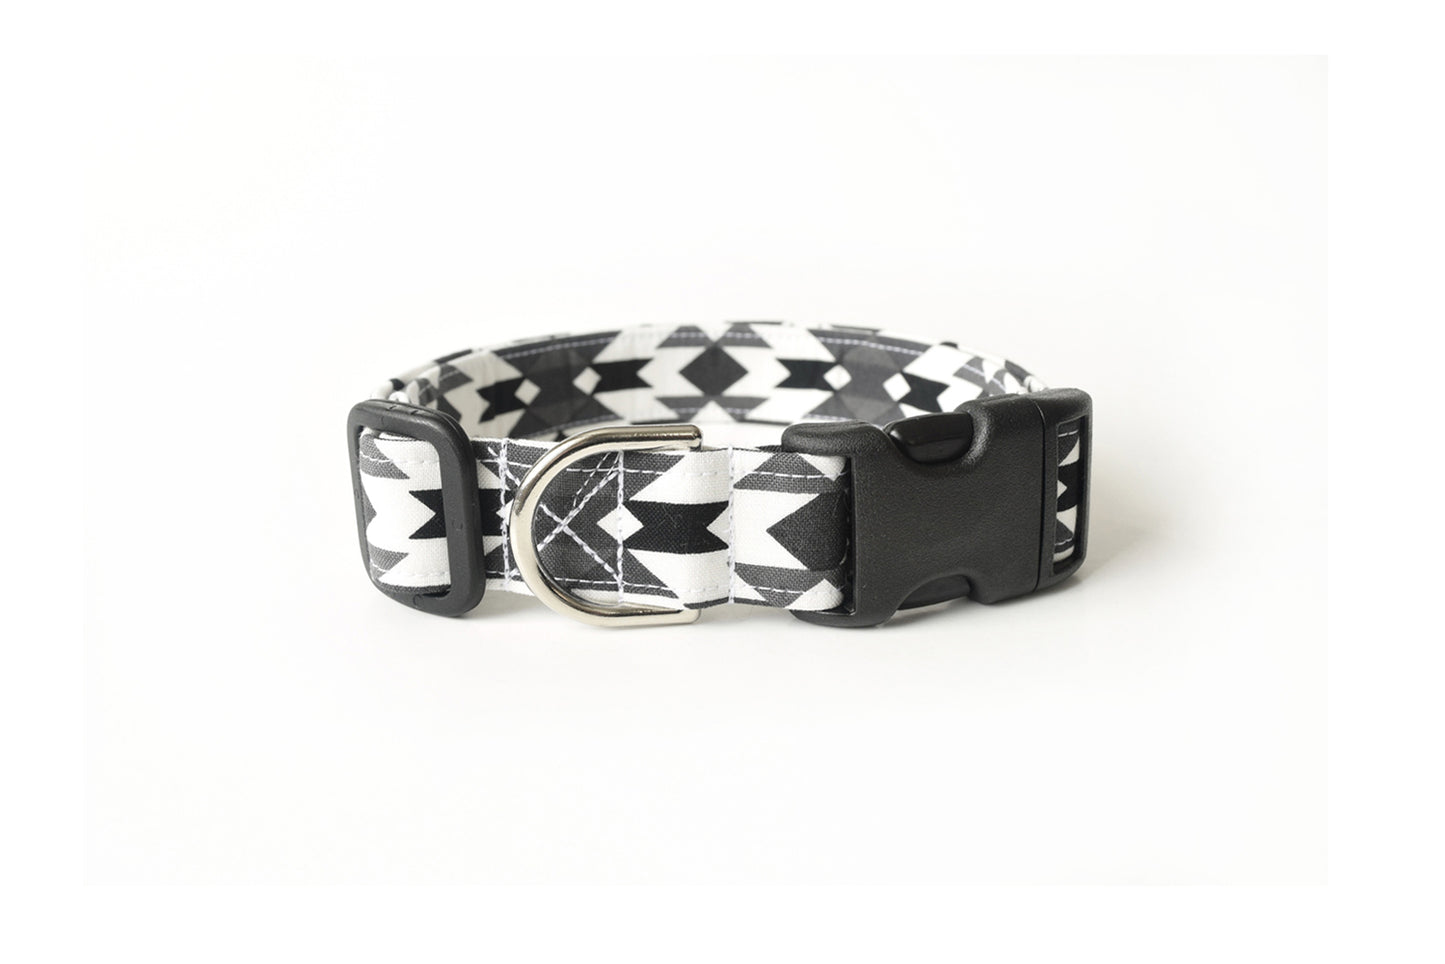 White & Gray Southwest Dog Collar - Handmade by Kira's Pet Shop 